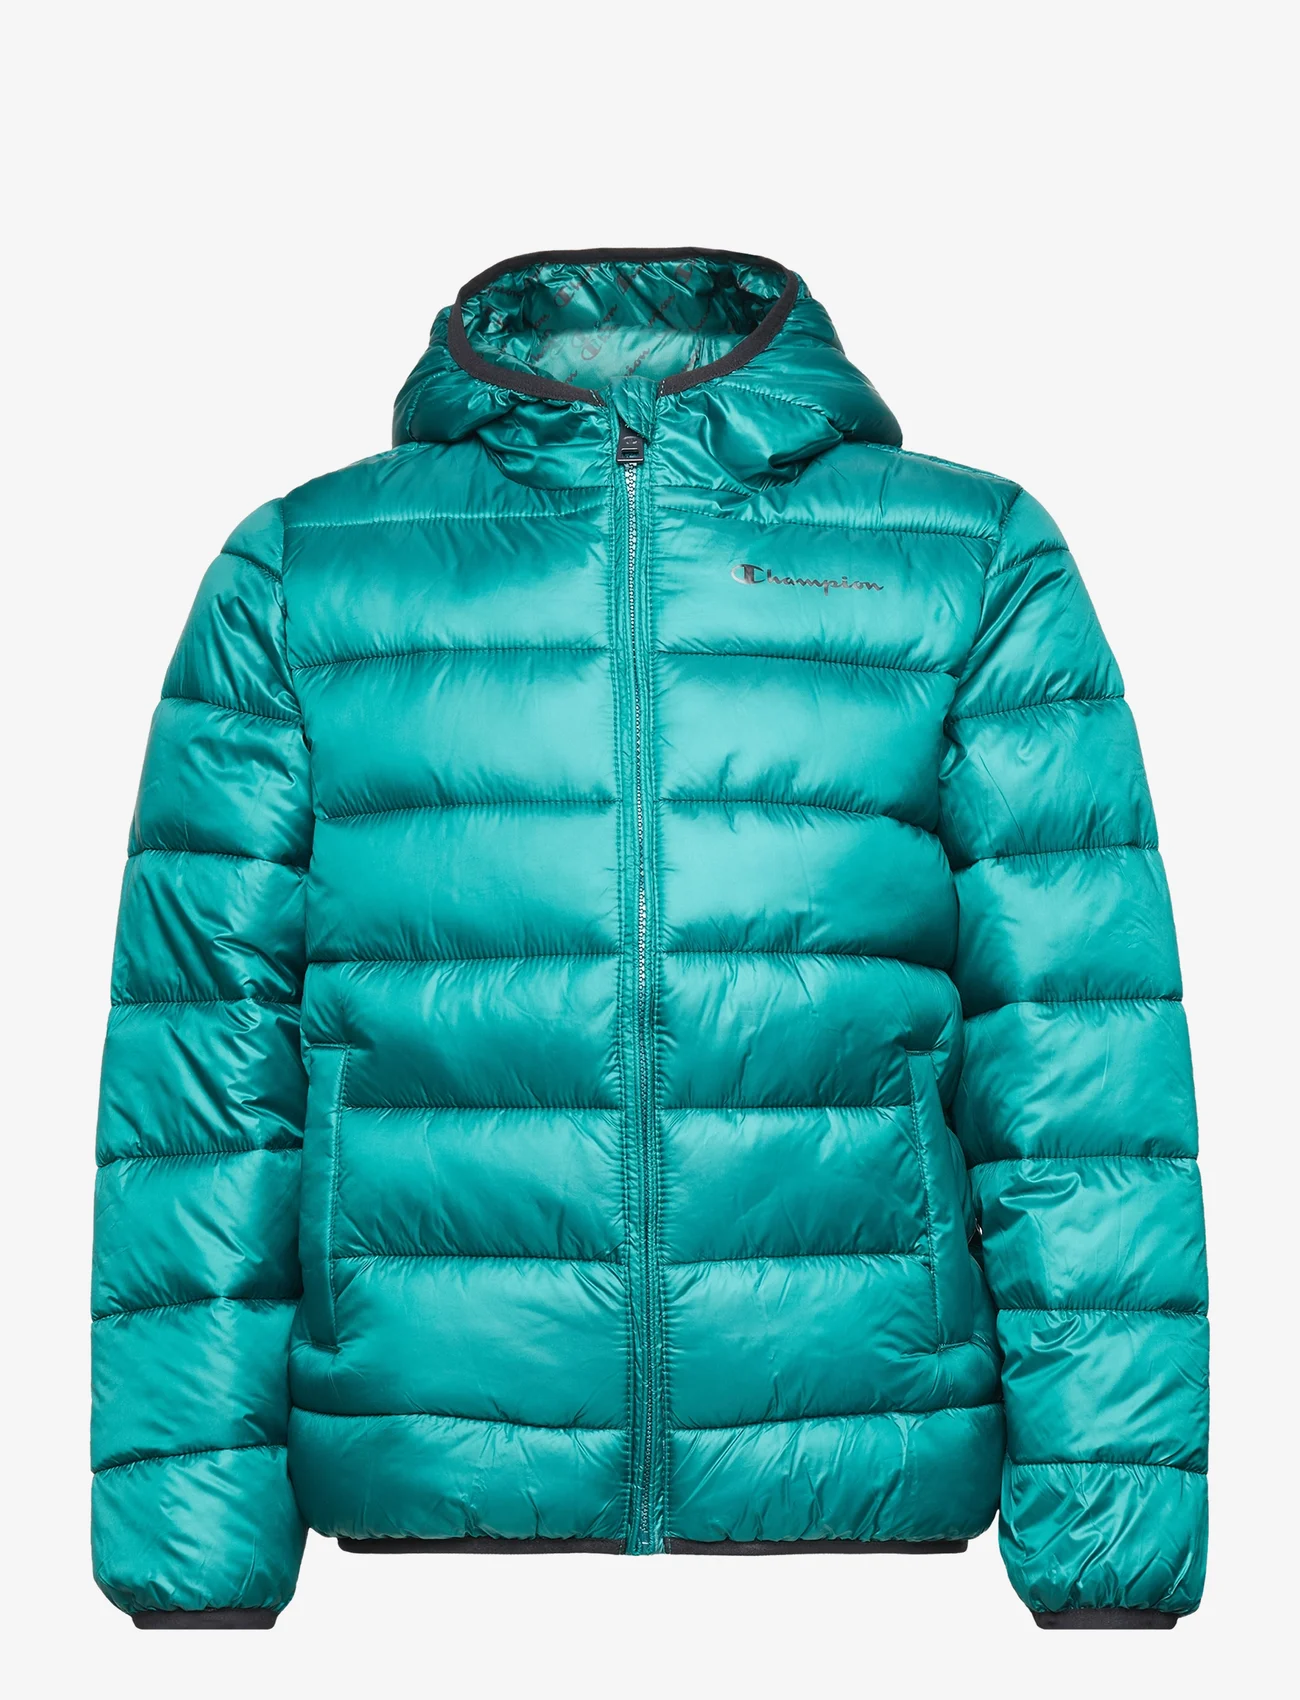 Champion - Hooded Jacket - insulated jackets - aventurine - 0